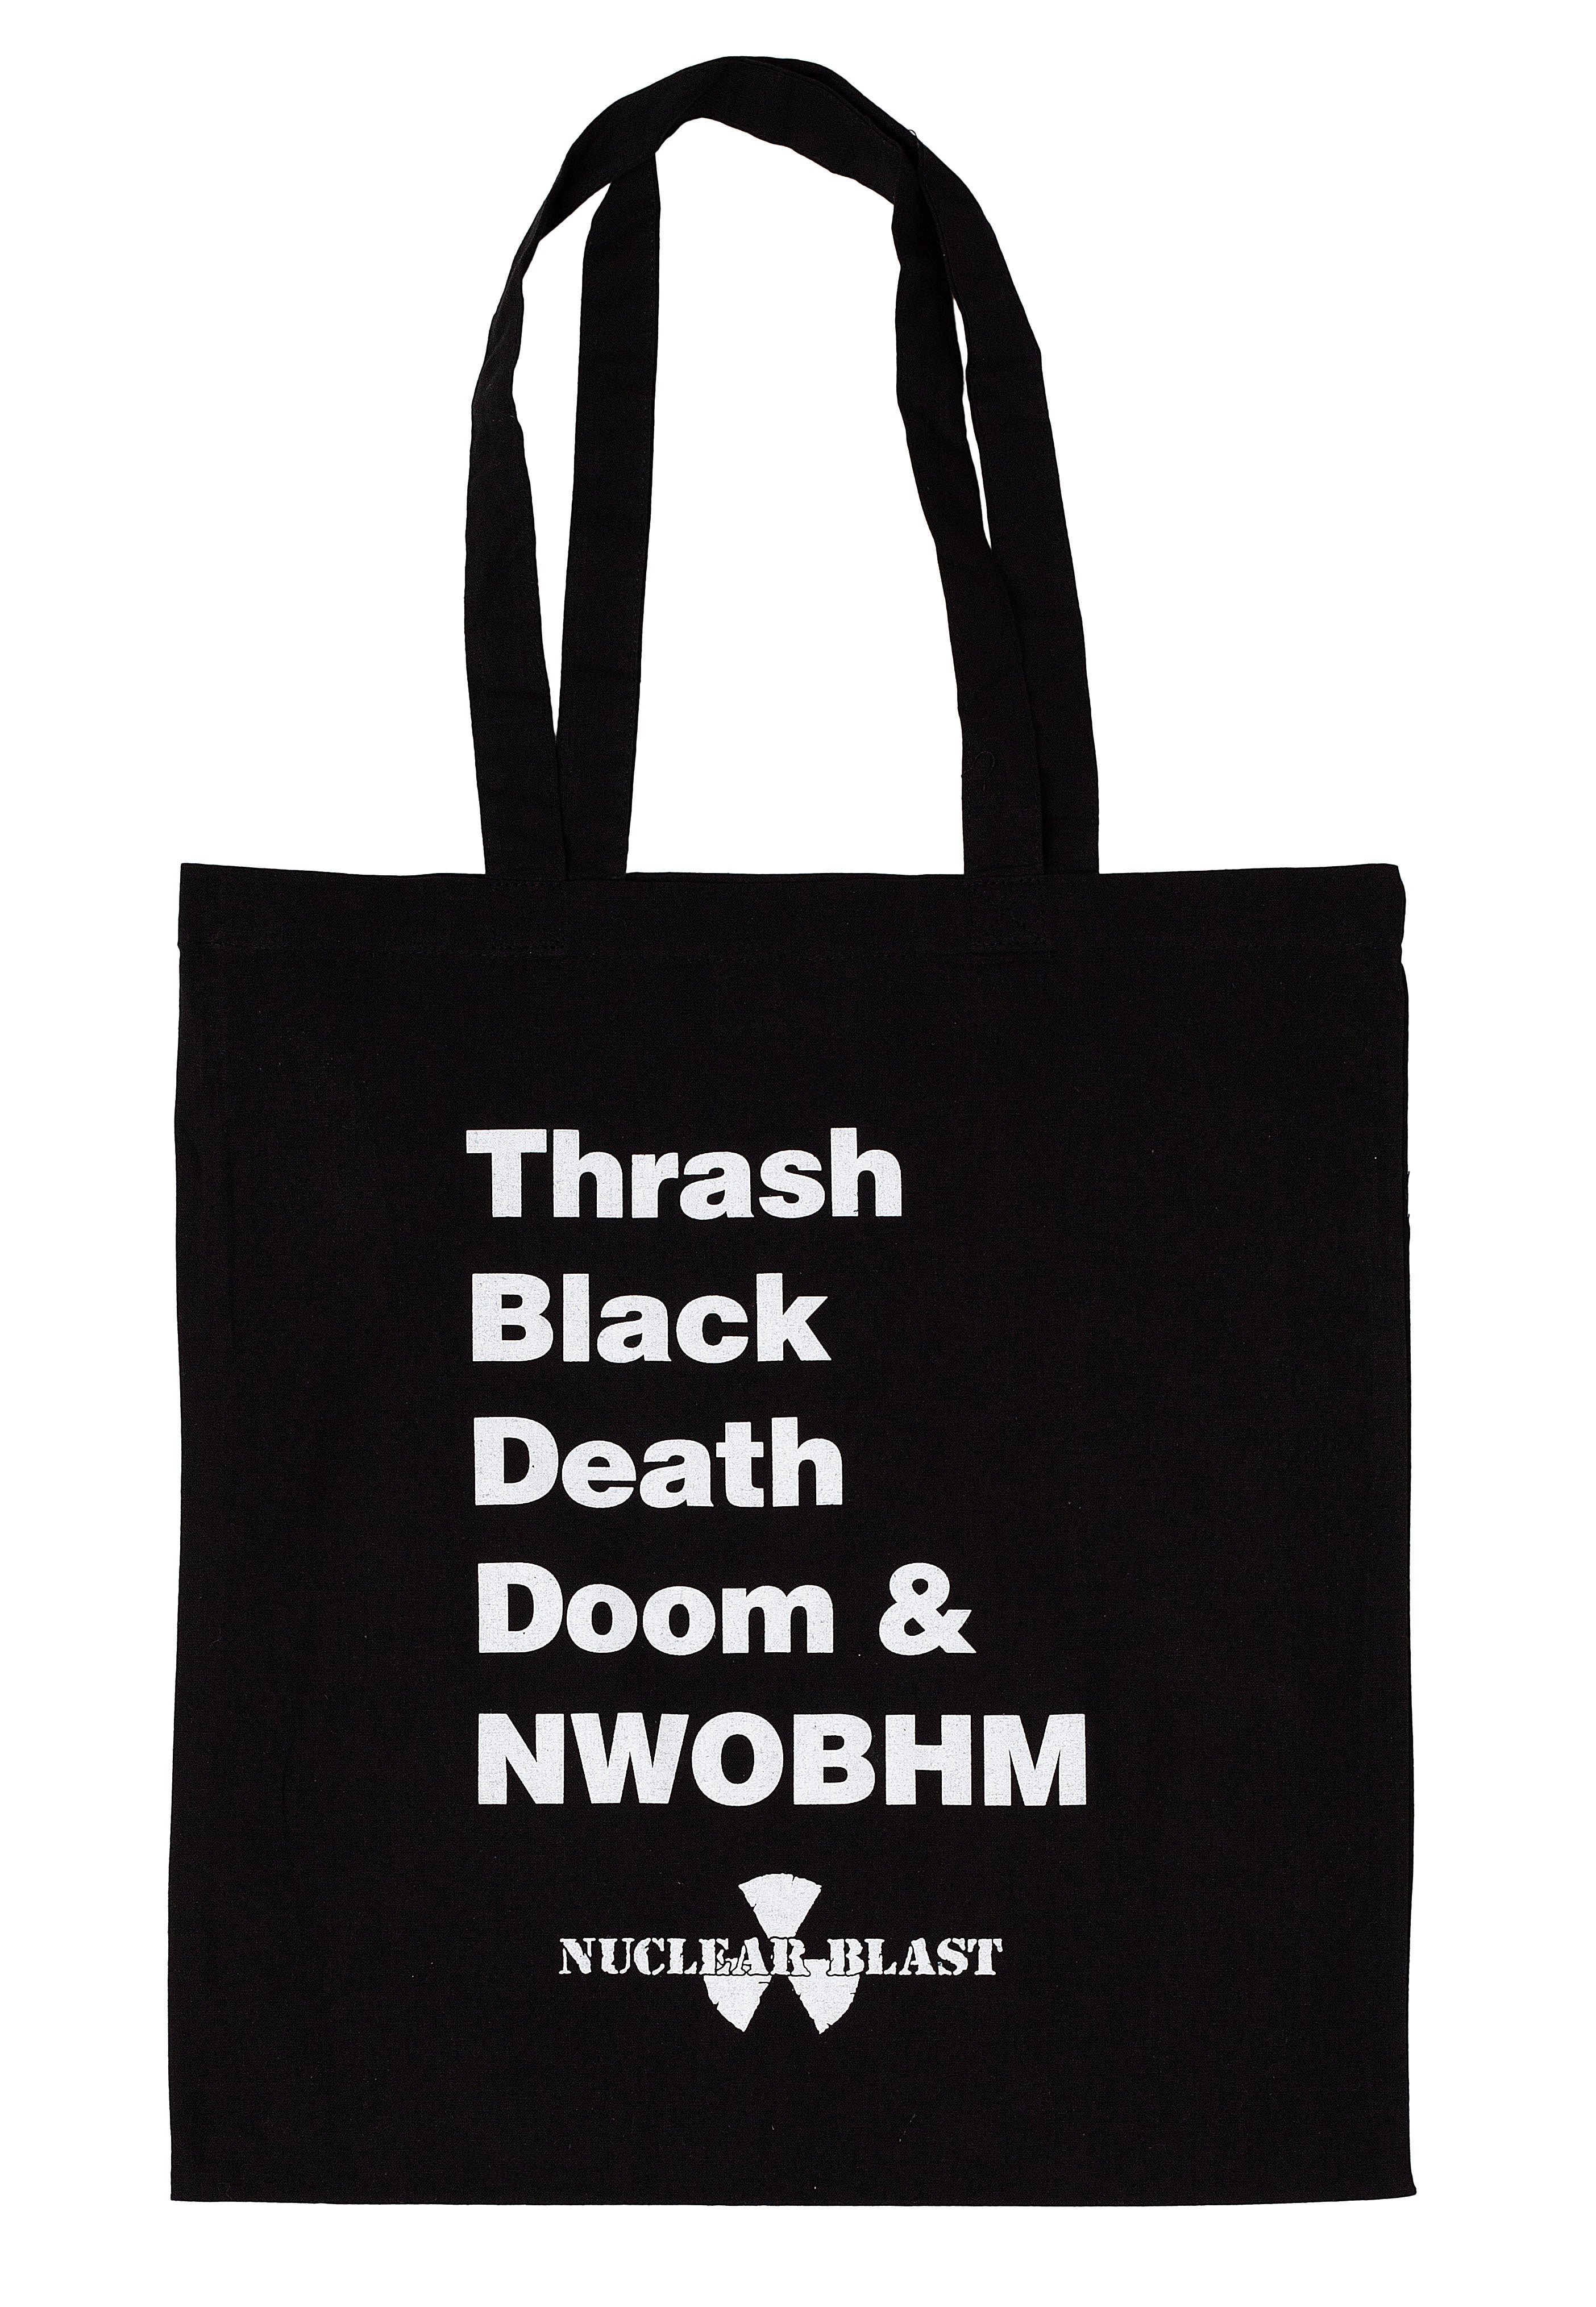 Nuclear Blast - Death Thrash Black - Tote Bag